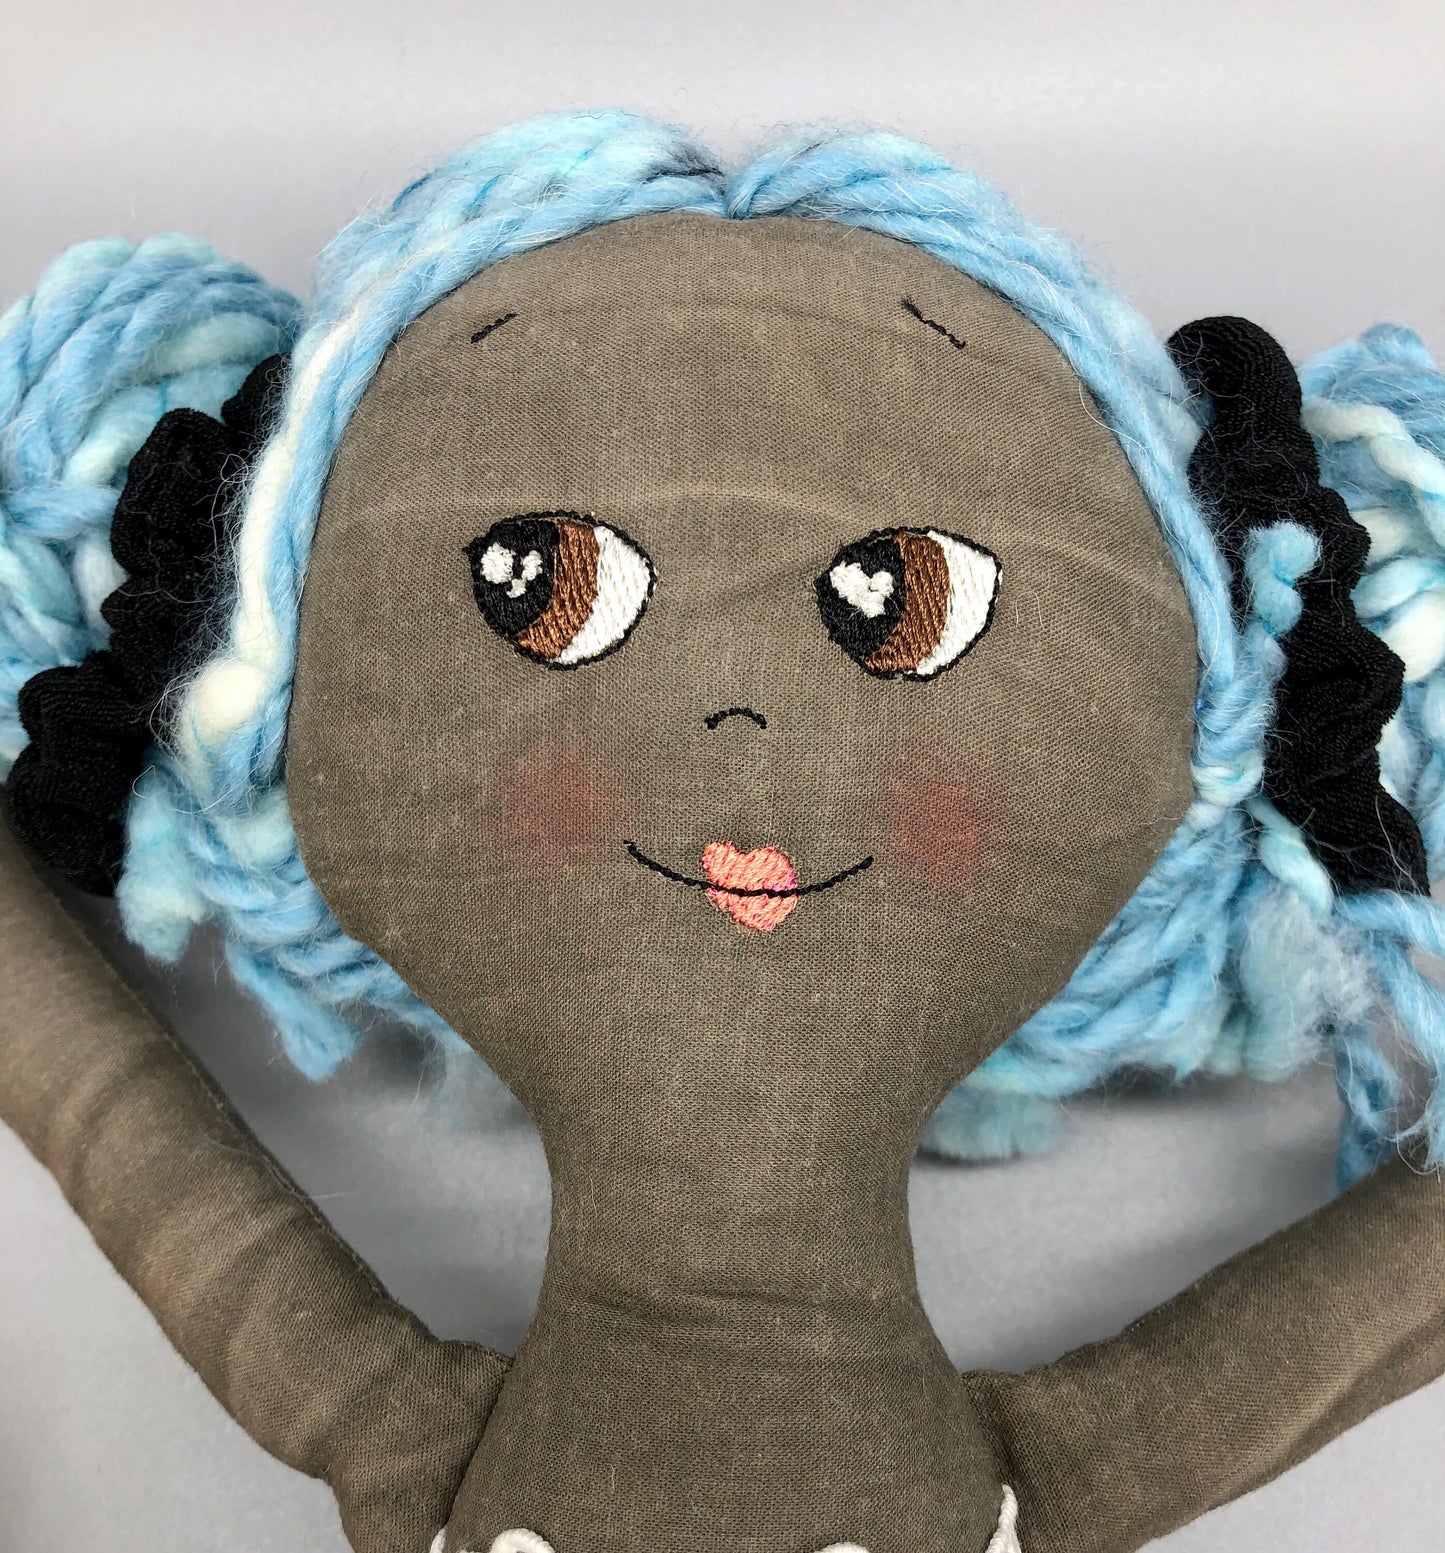 Handmade MERMAID Doll, "CORALIA", handmade gift, mermaid doll, black doll, bipoc doll, heirloom doll, mermaid toy, muslin doll, rag doll